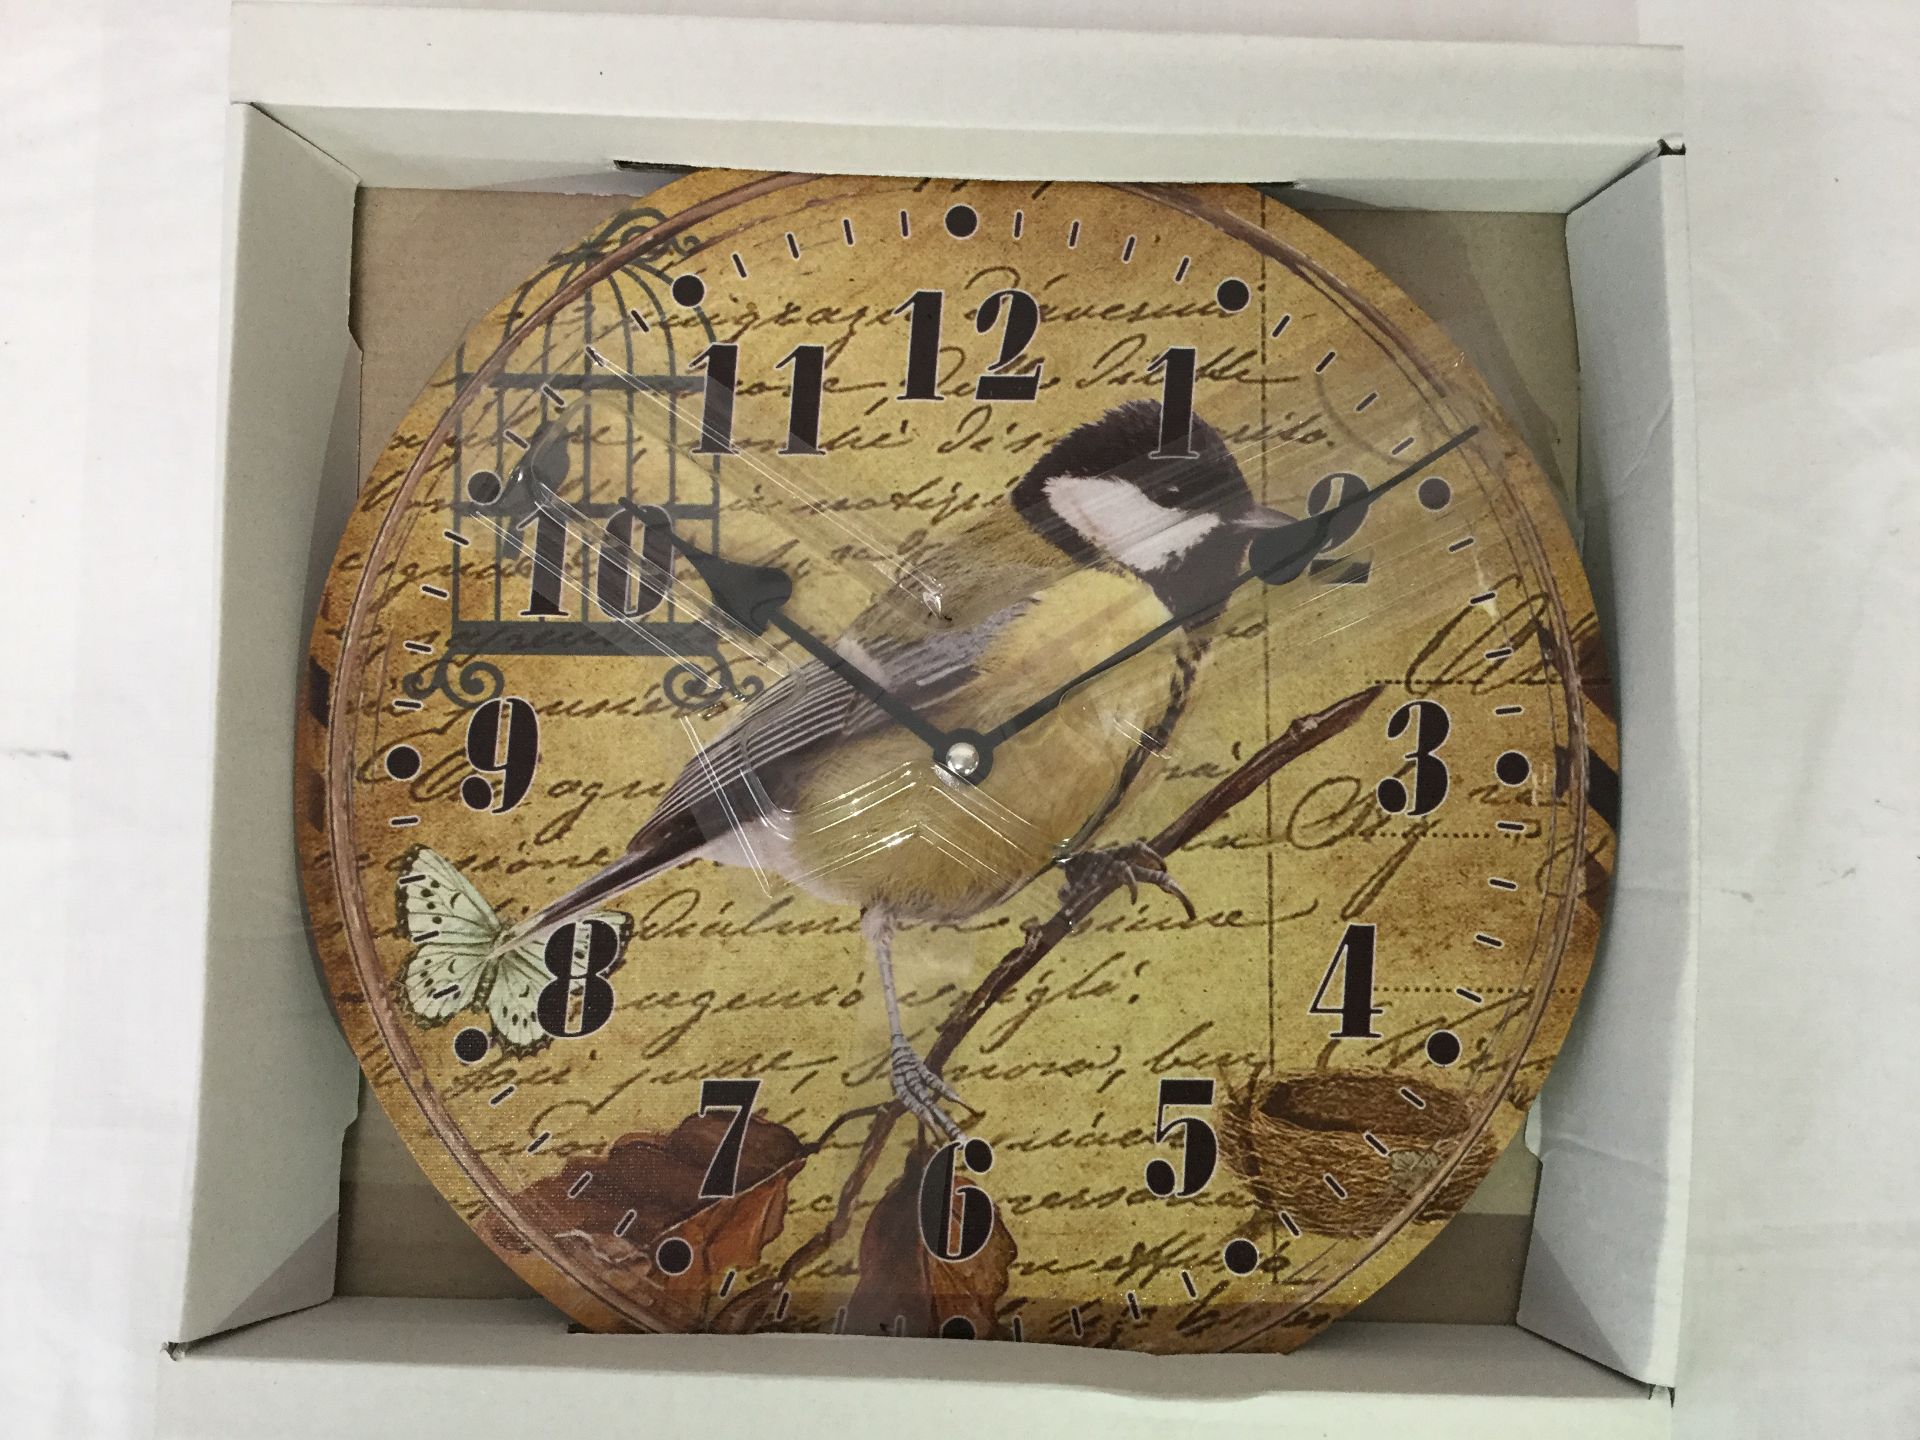 New Bird Clock In Original Packaging